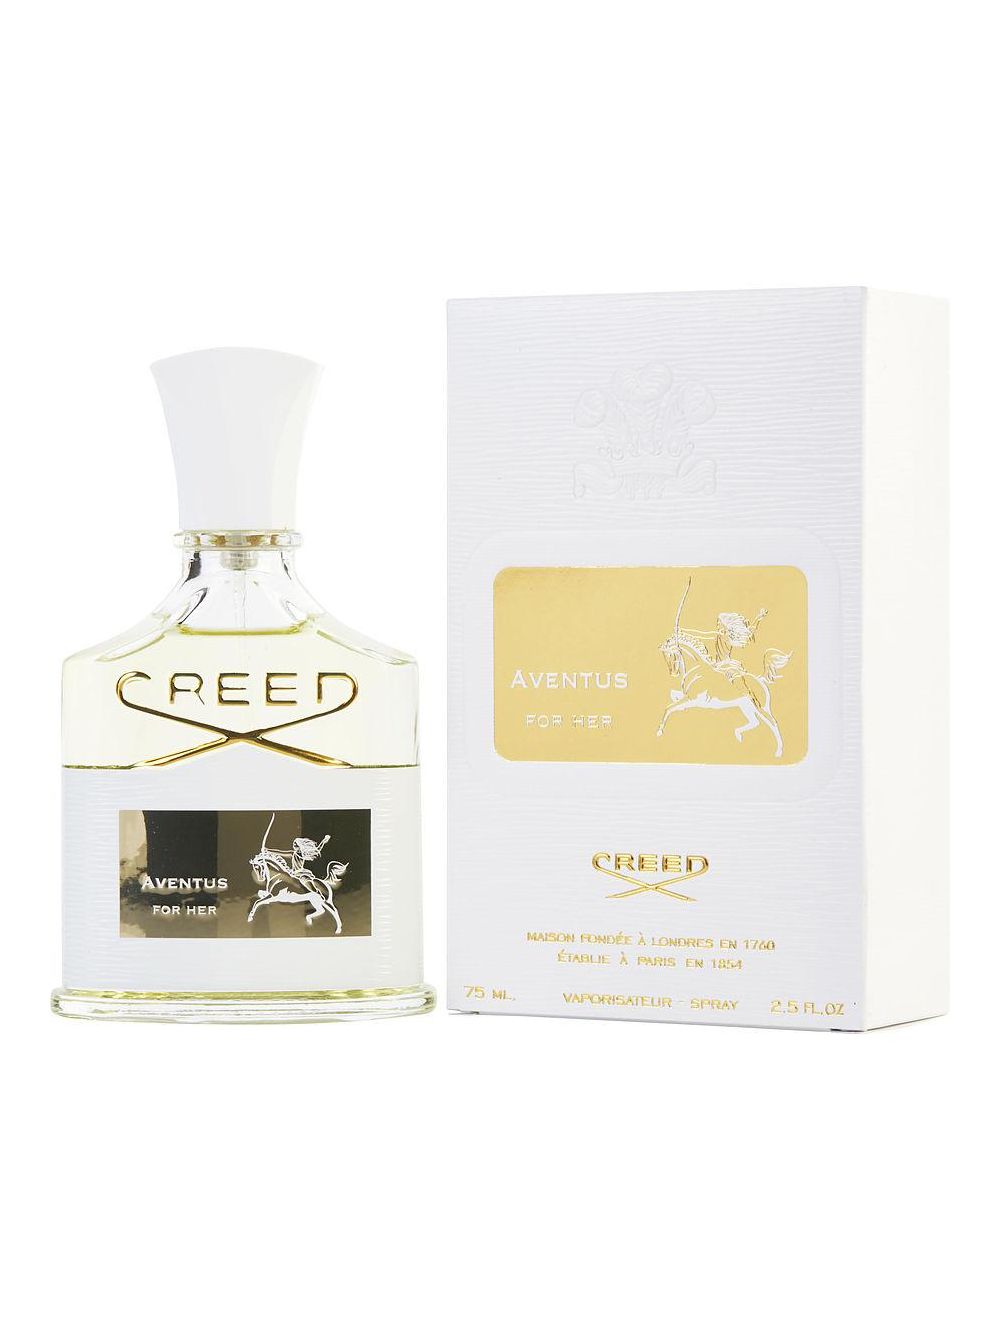 Aventus For Her Eau De Parfum -75ml - Creed |TBN Ventures